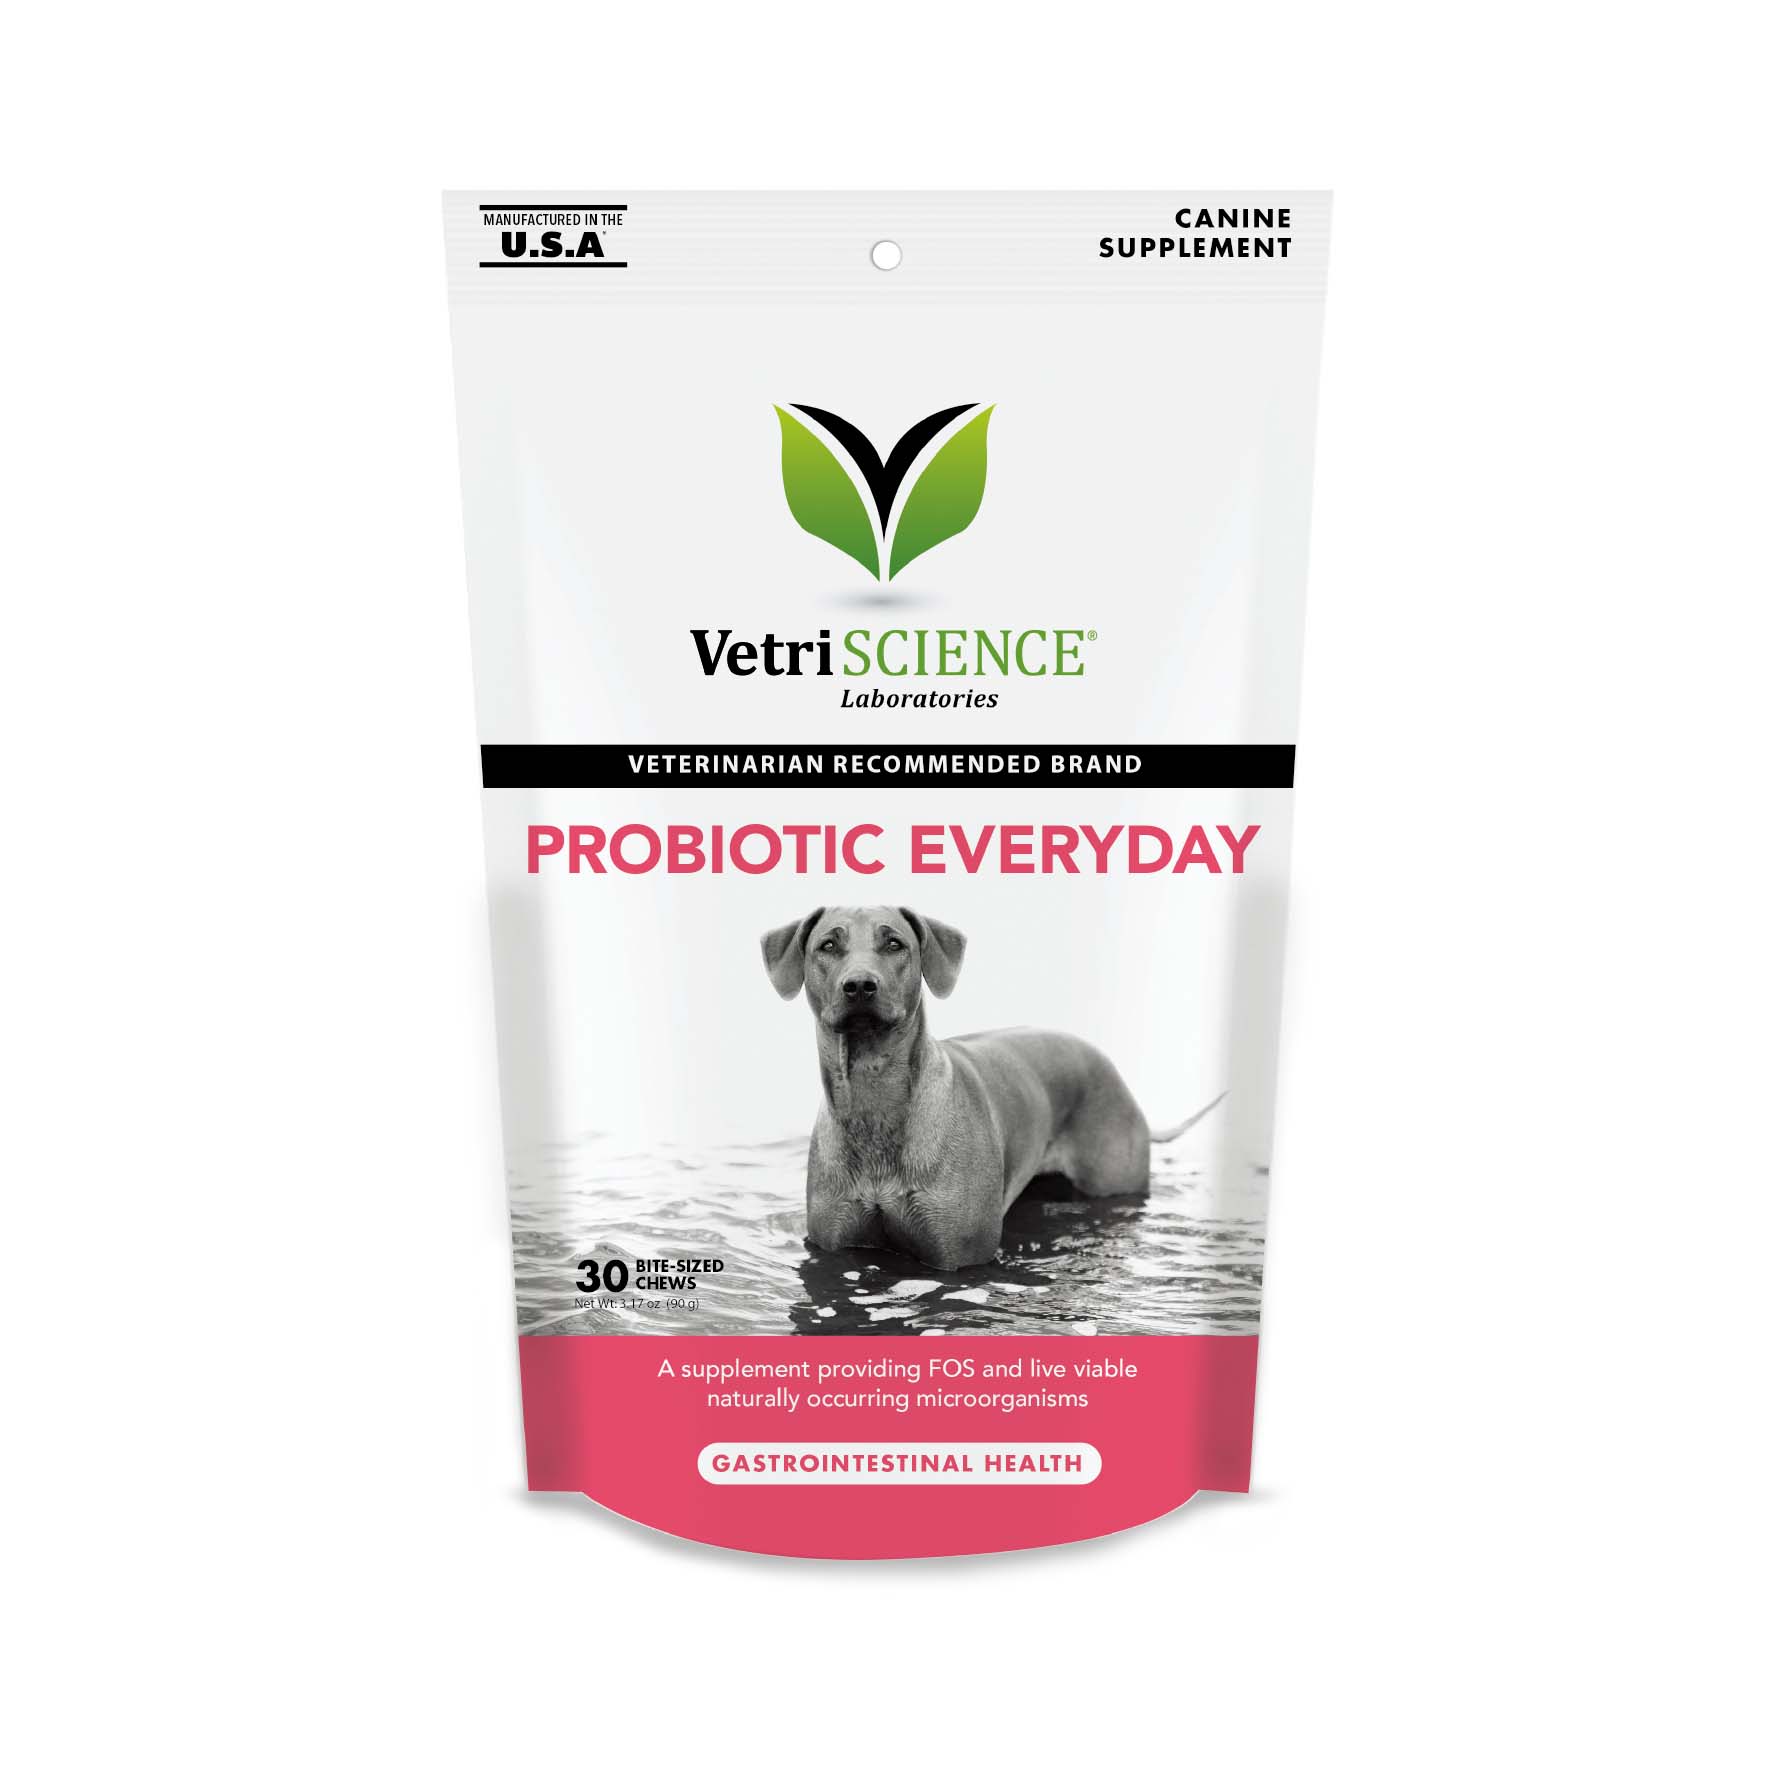 維多麗 益菌整腸 犬嚼錠
Vetriscience Probiotic Chews for Dogs